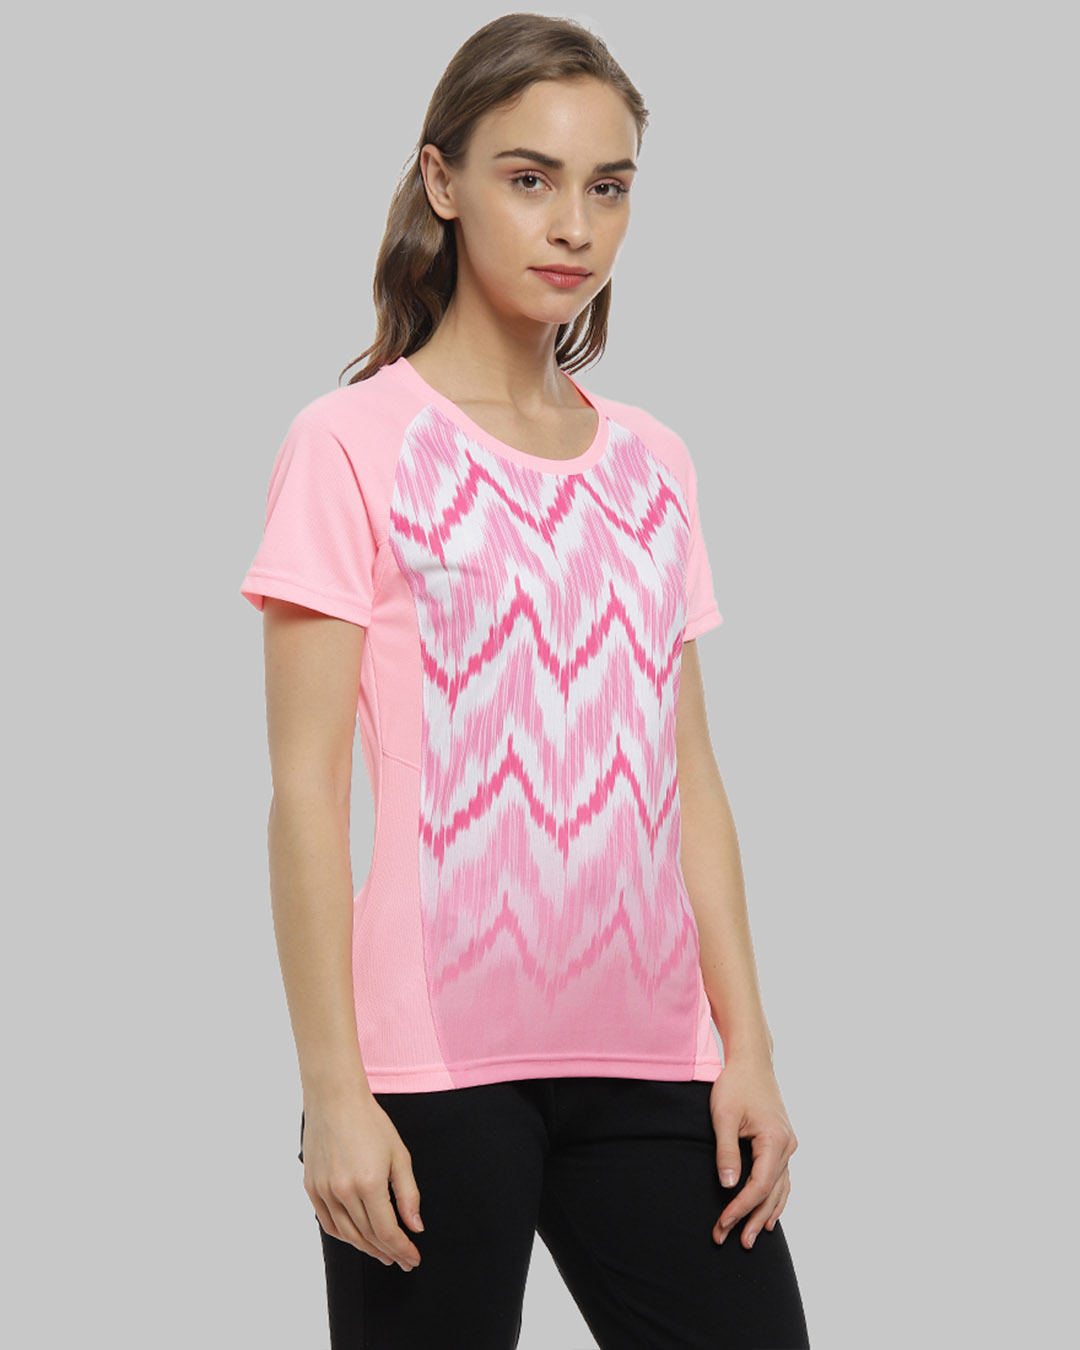 Shop Graphic Print Women Round Neck Pink Sports Jersey T Shirt-Back